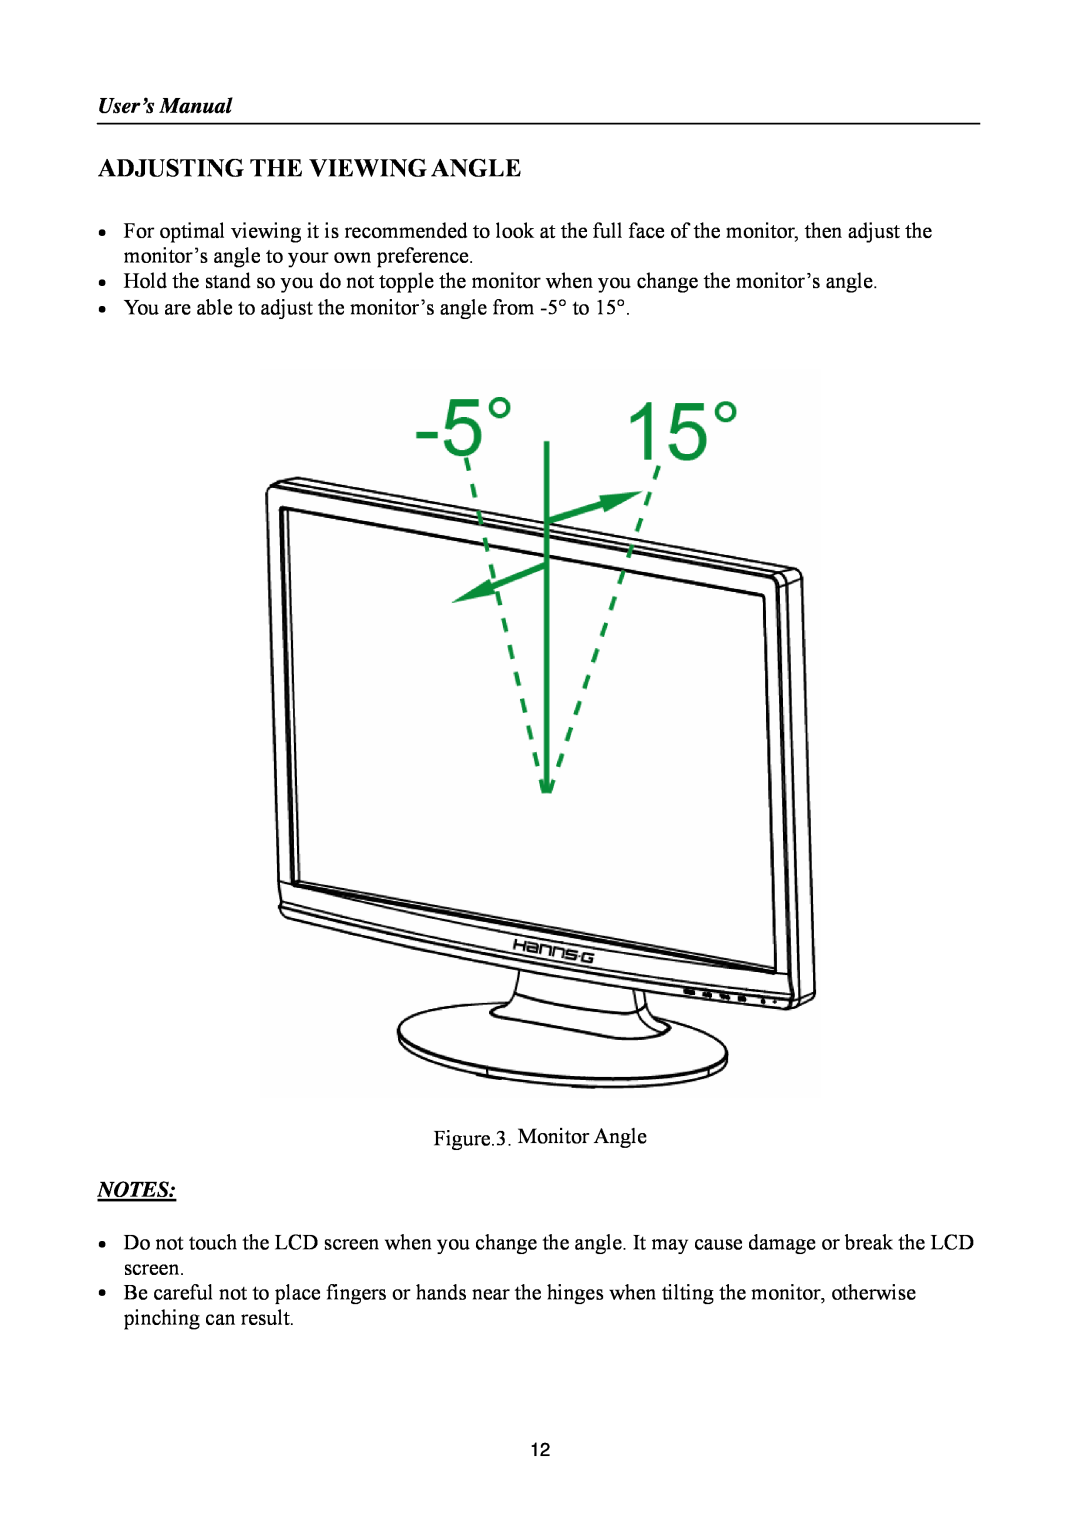 Hanns.G HA191 manual Adjusting The Viewing Angle, User’s Manual 